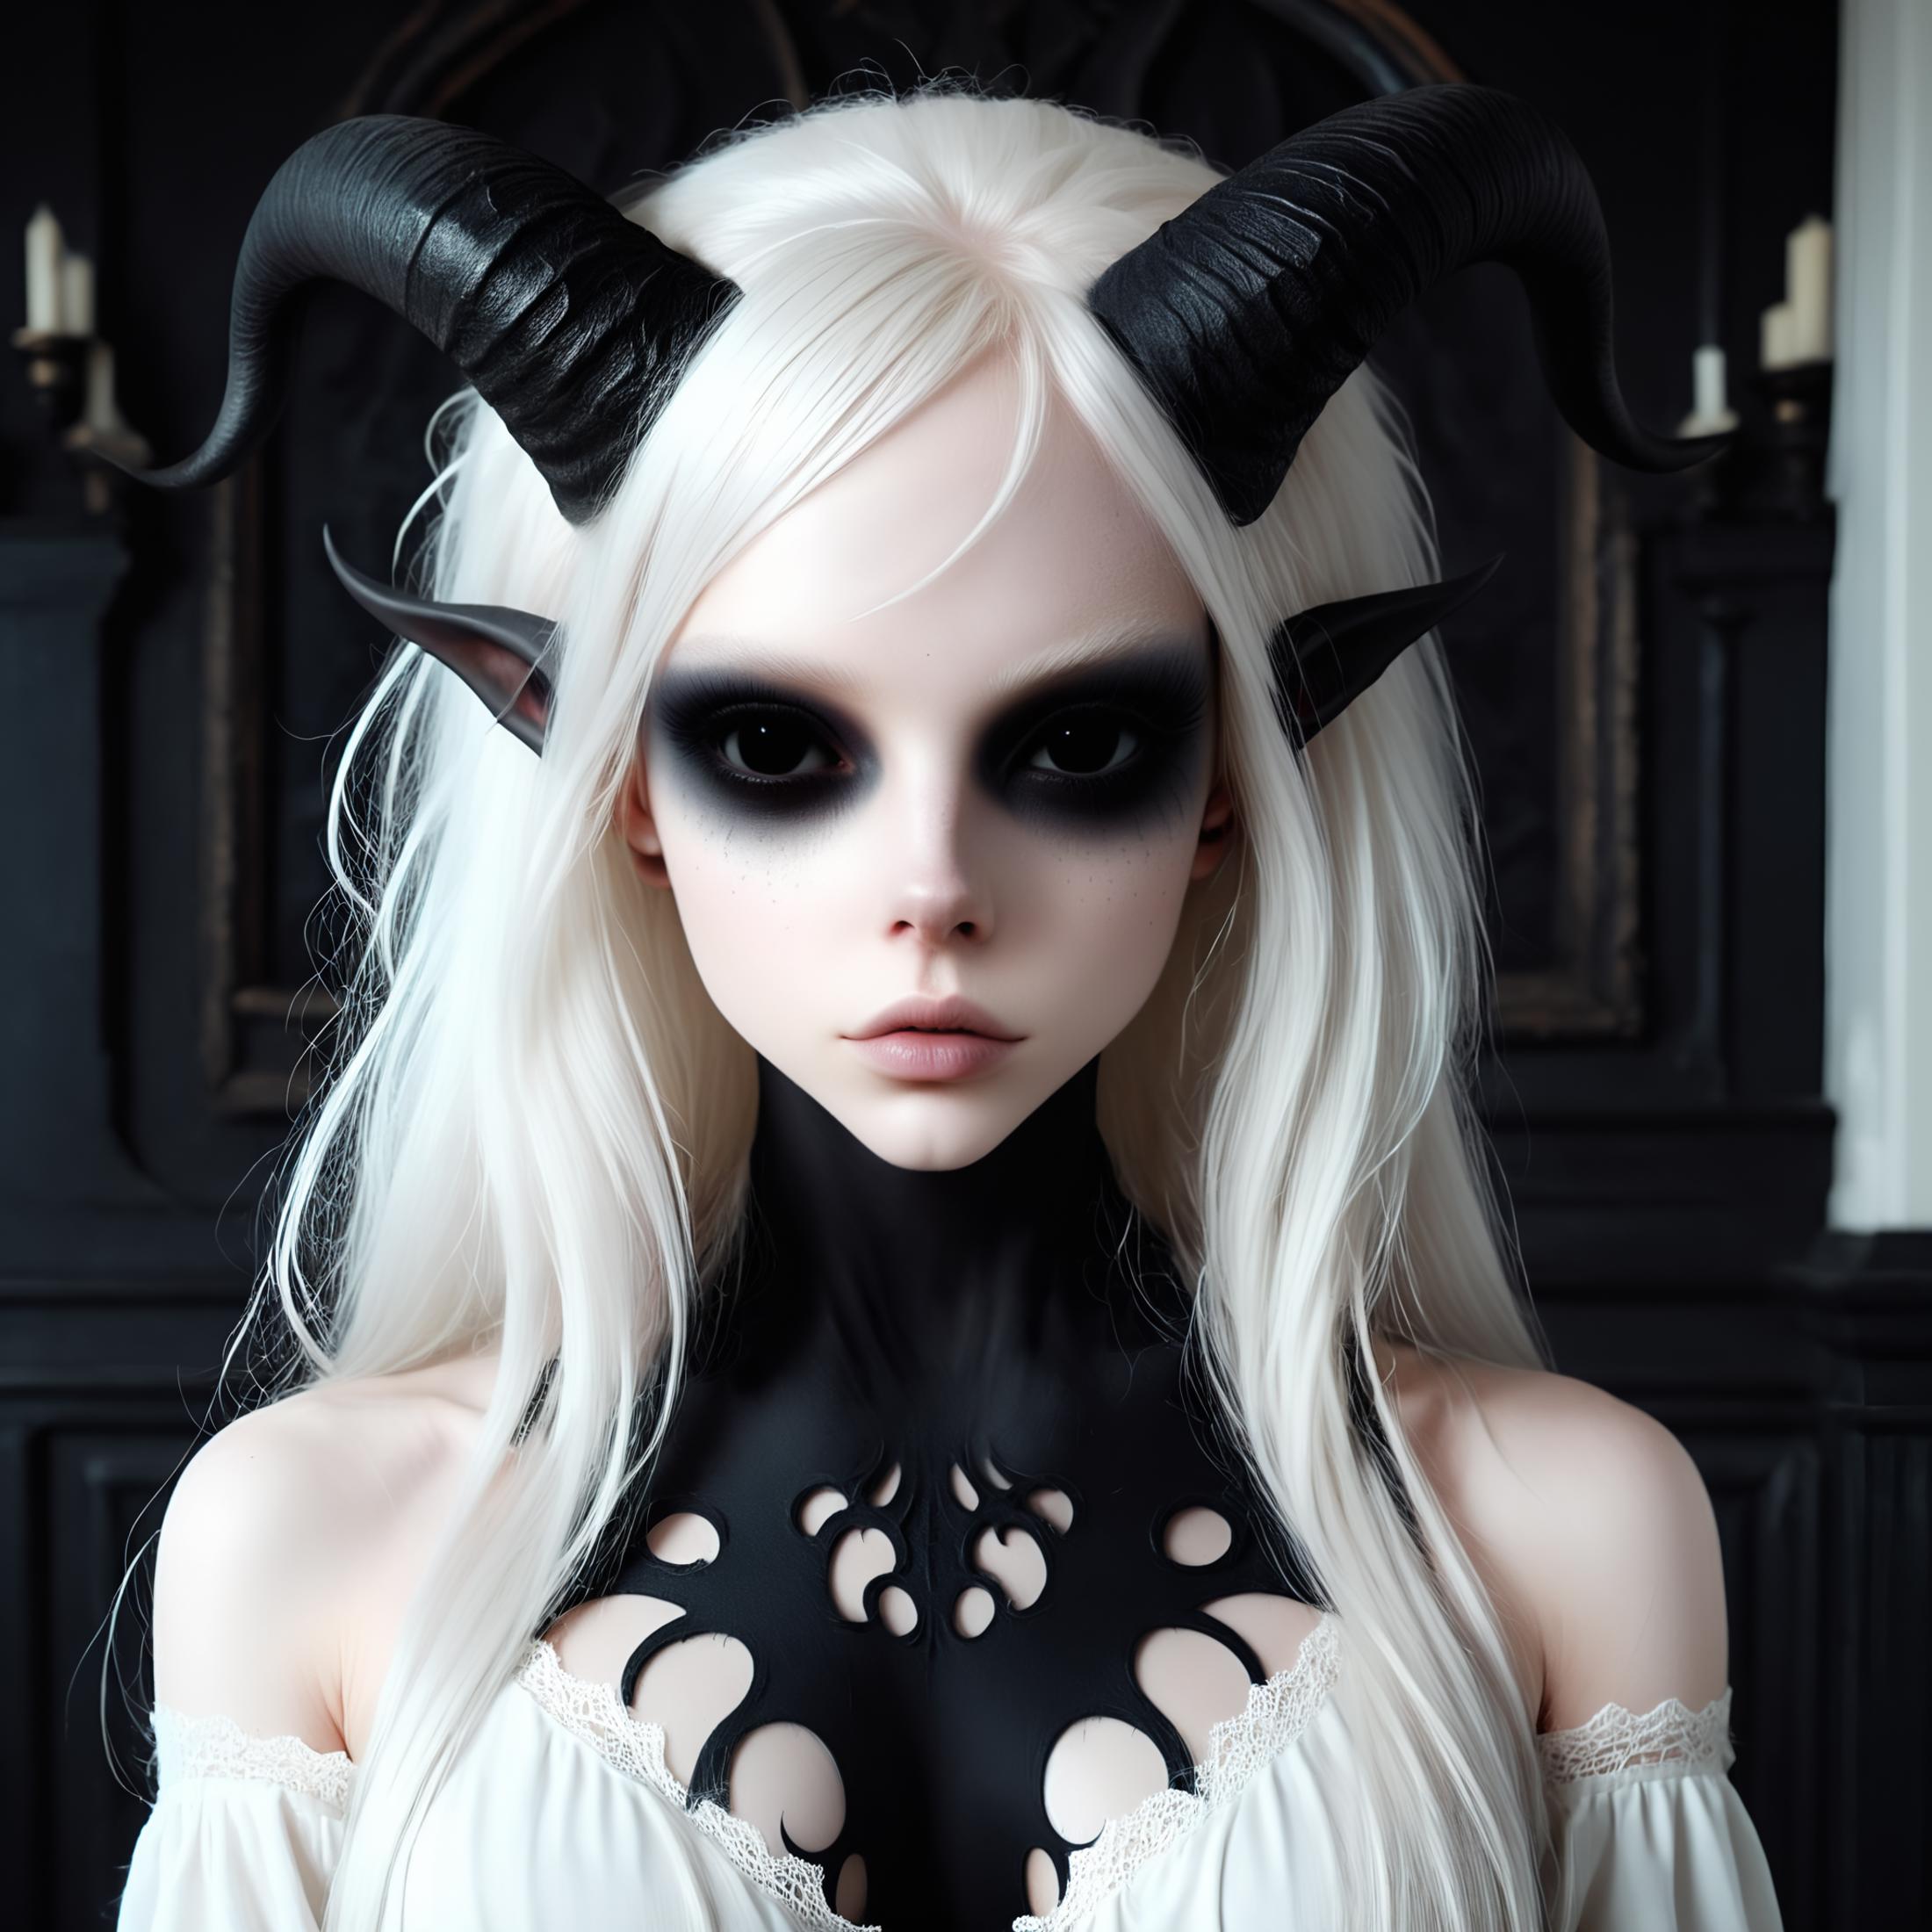 Black eye demon image by NaomiVK